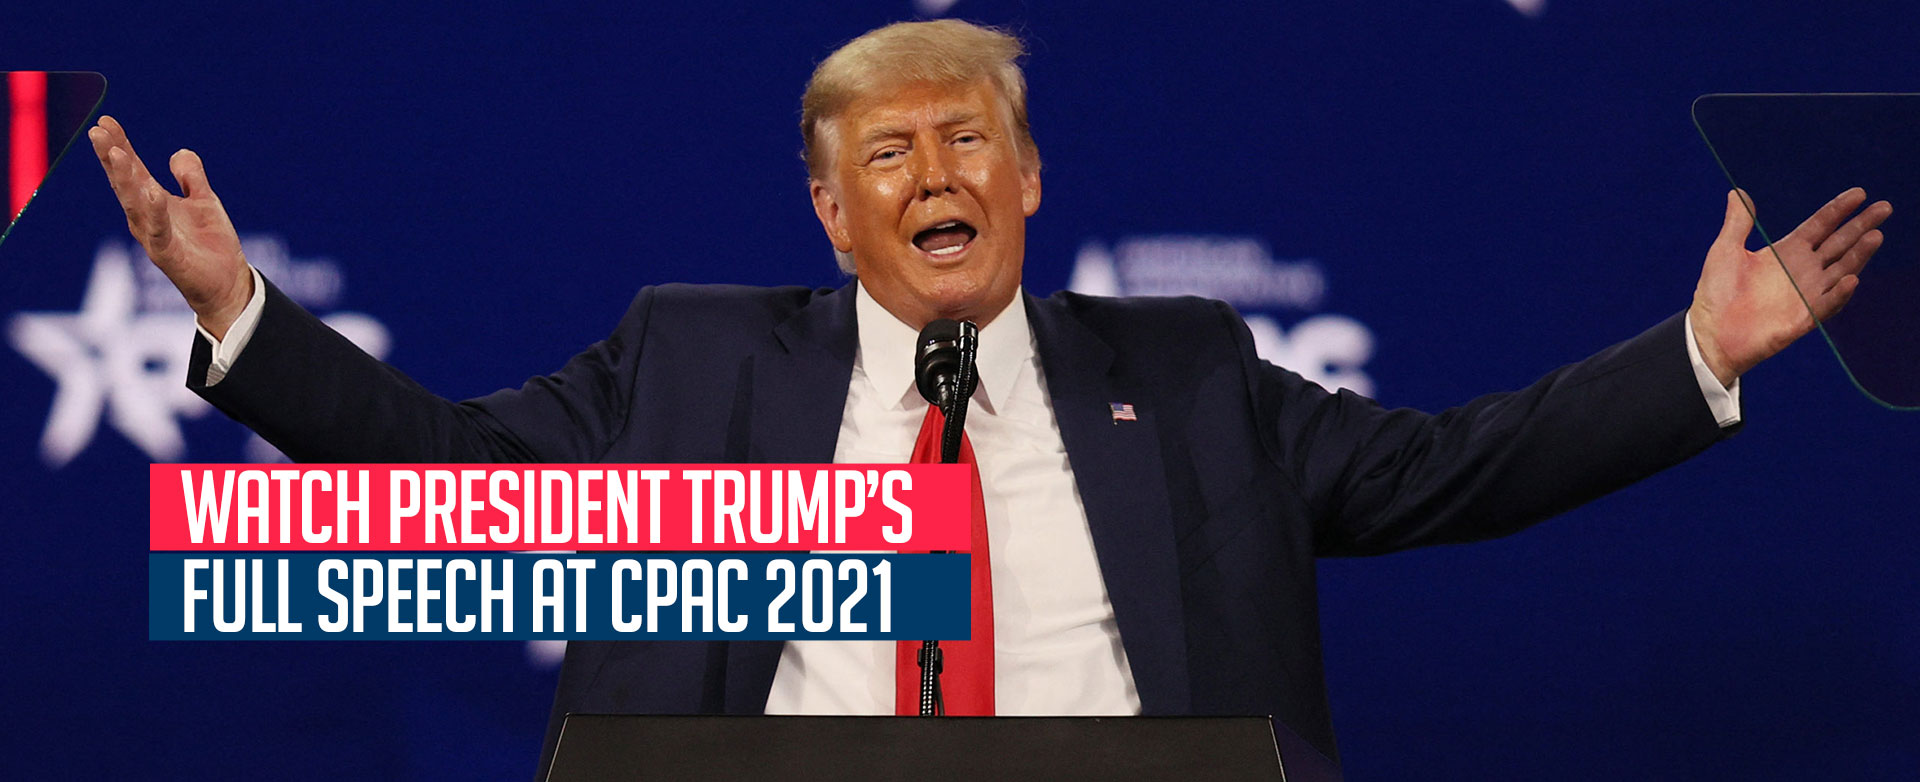 MyPatriotsNetwork-Watch President Trump’s Full Speech At CPAC 2021